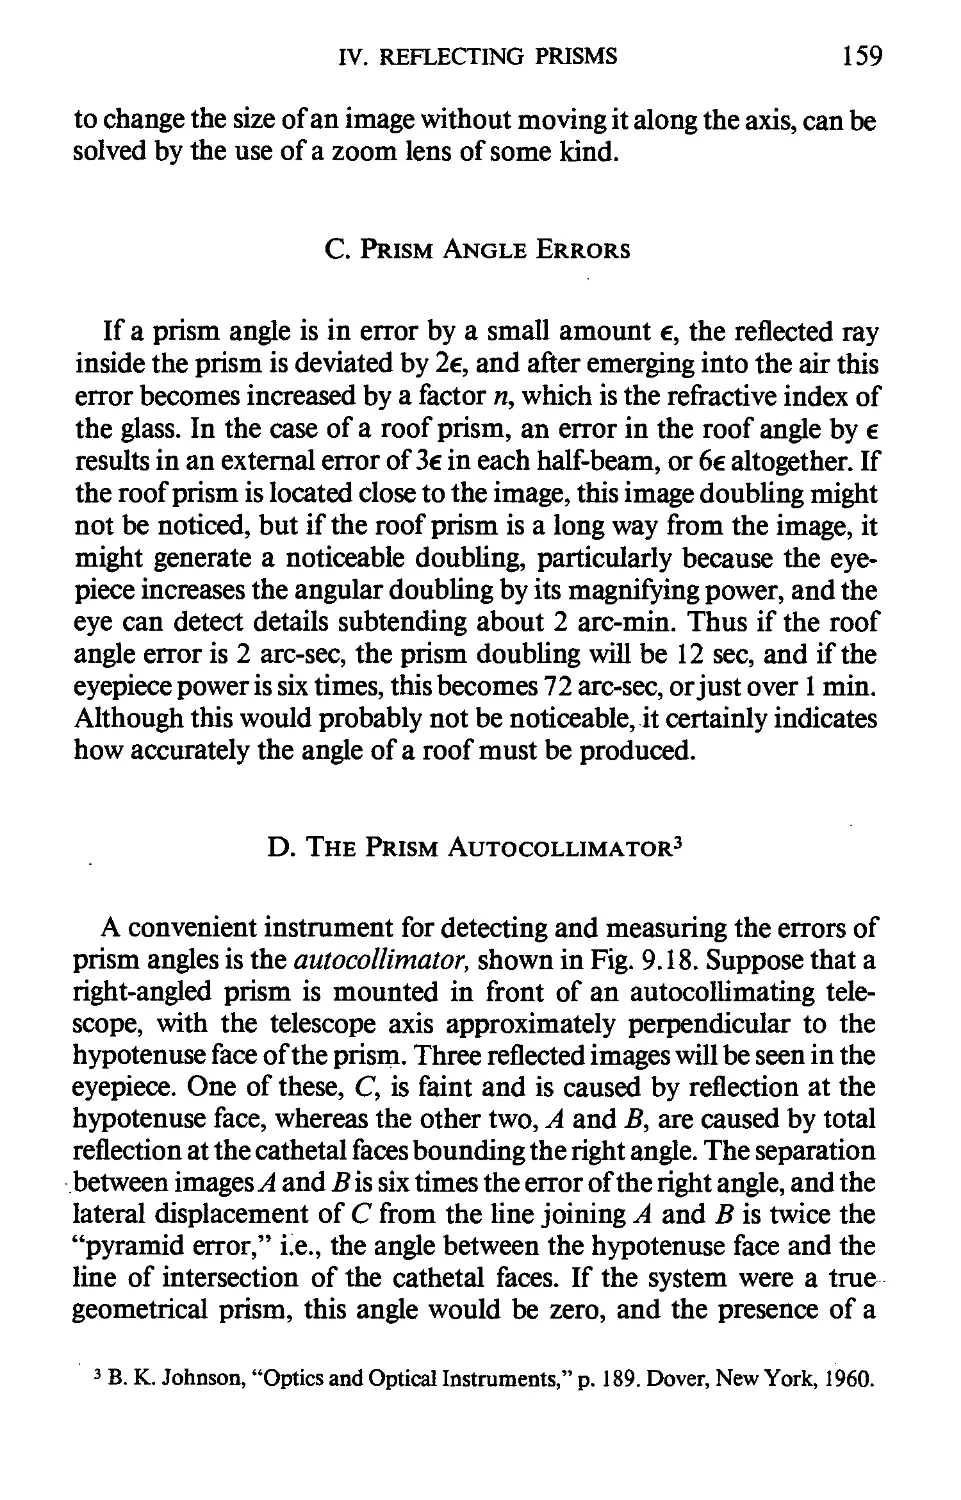 С. Prism Angle Errors
D. The Prism Autocollimator